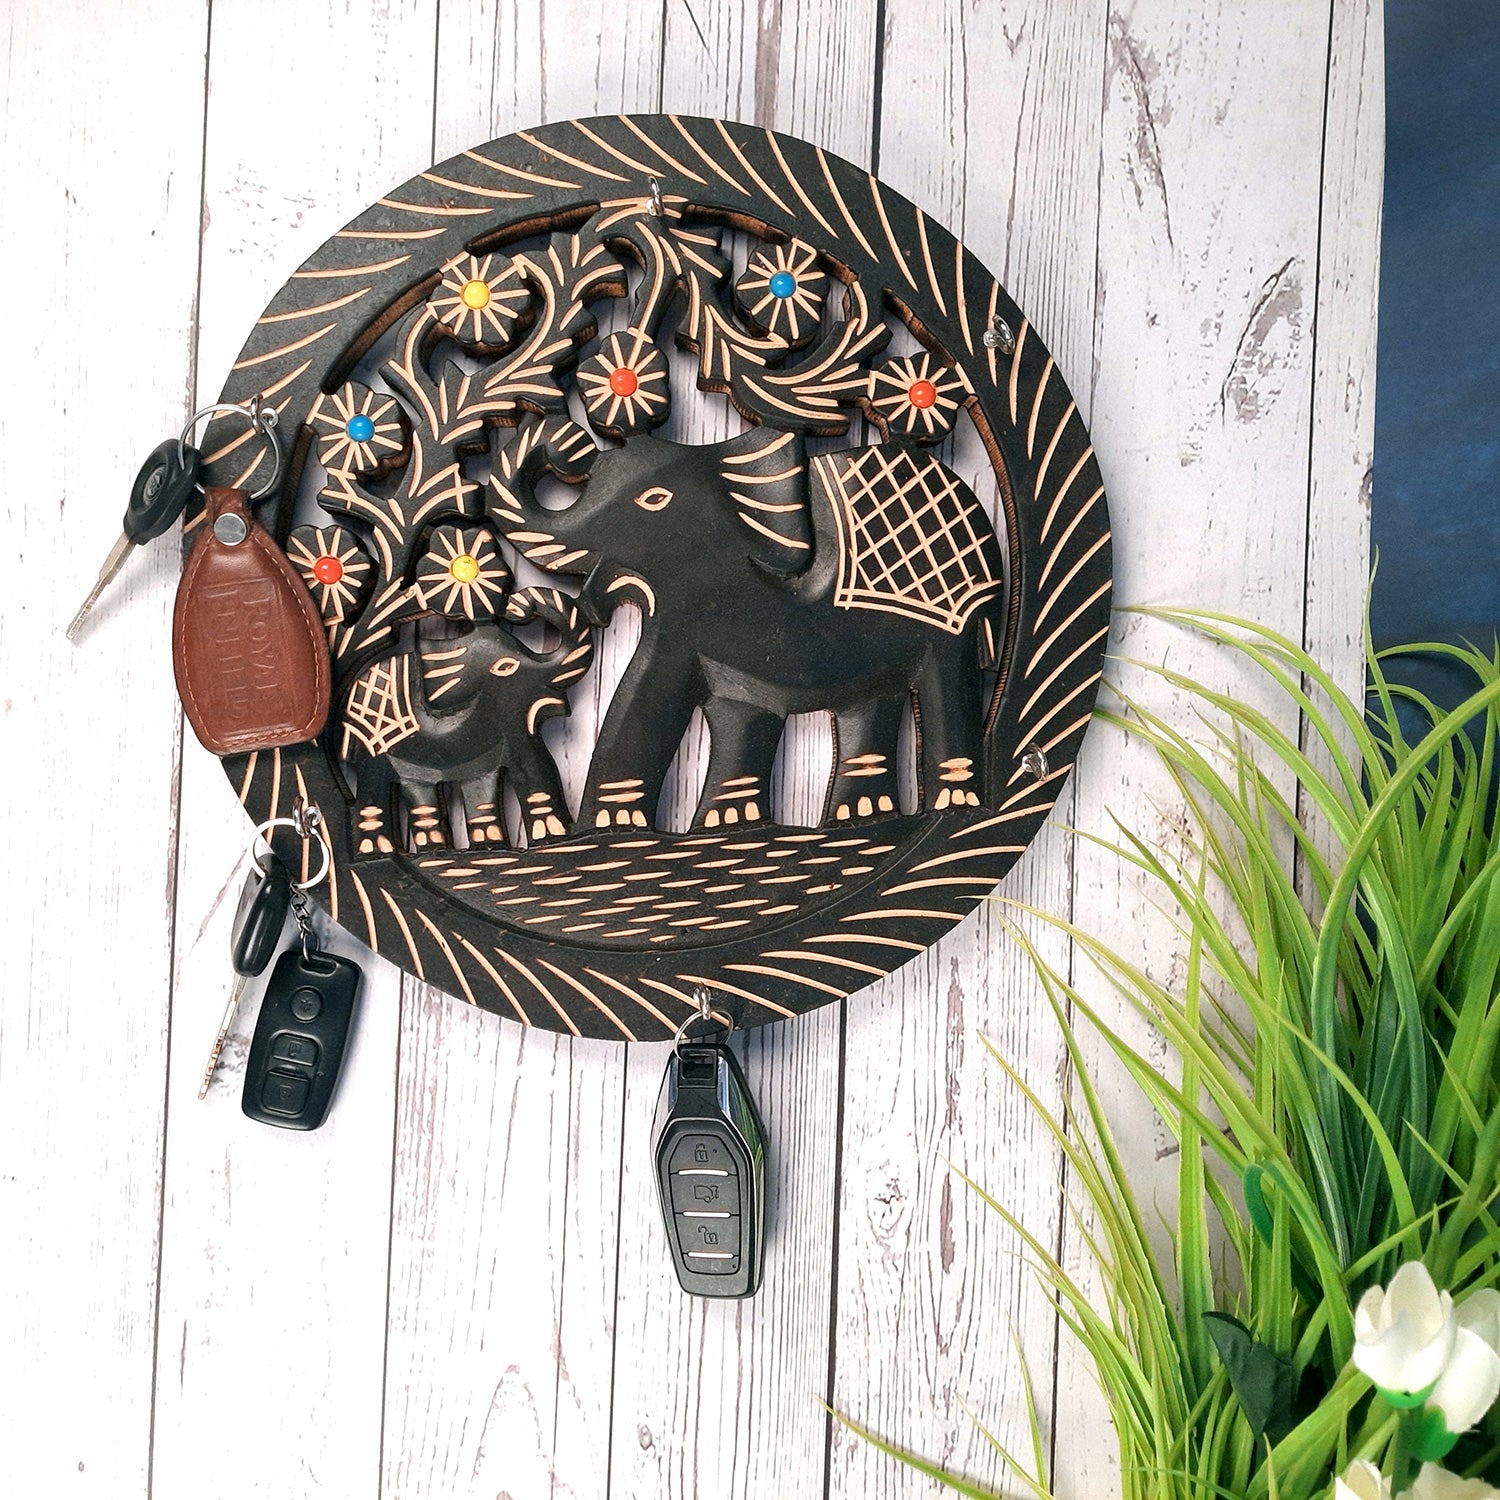 Key Holder Stands | Decorative Keys Hook Wall Hangers - Elephant Design | Keys Organizer - For Home, Entrance, Office Decor & Gifts - 11 Inch (6 Hooks)